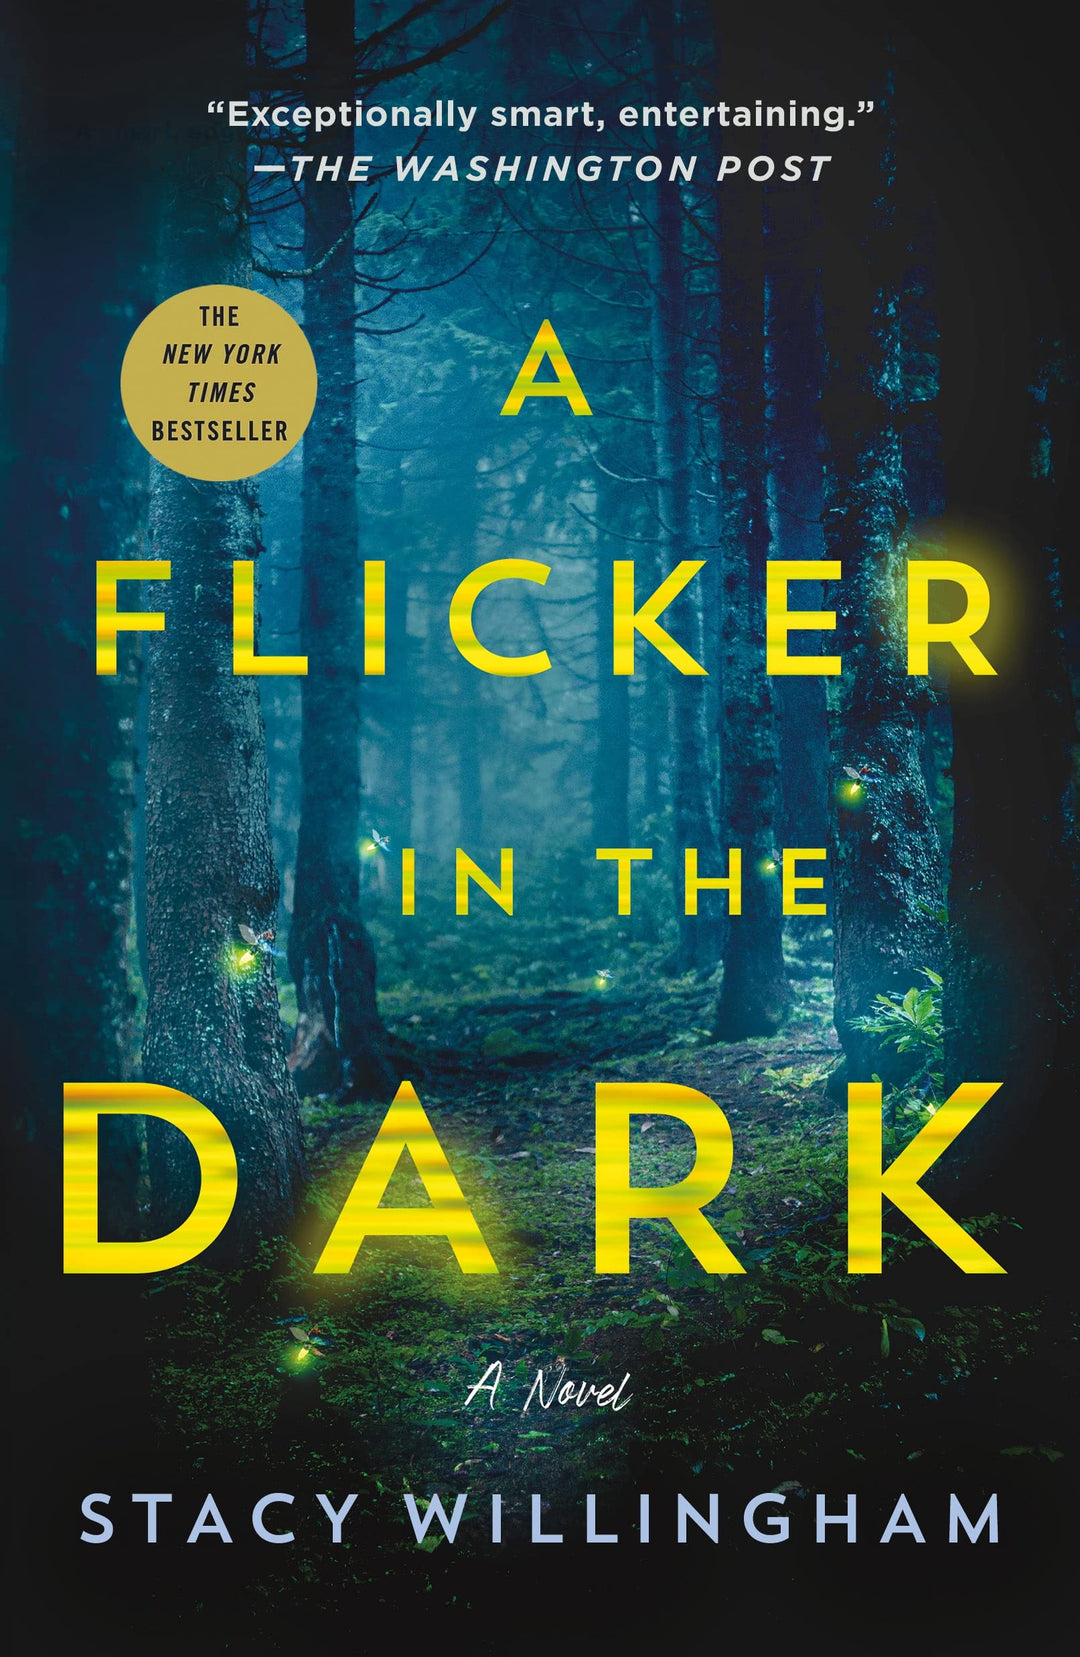 Flicker in the Dark by Stacy Willingham